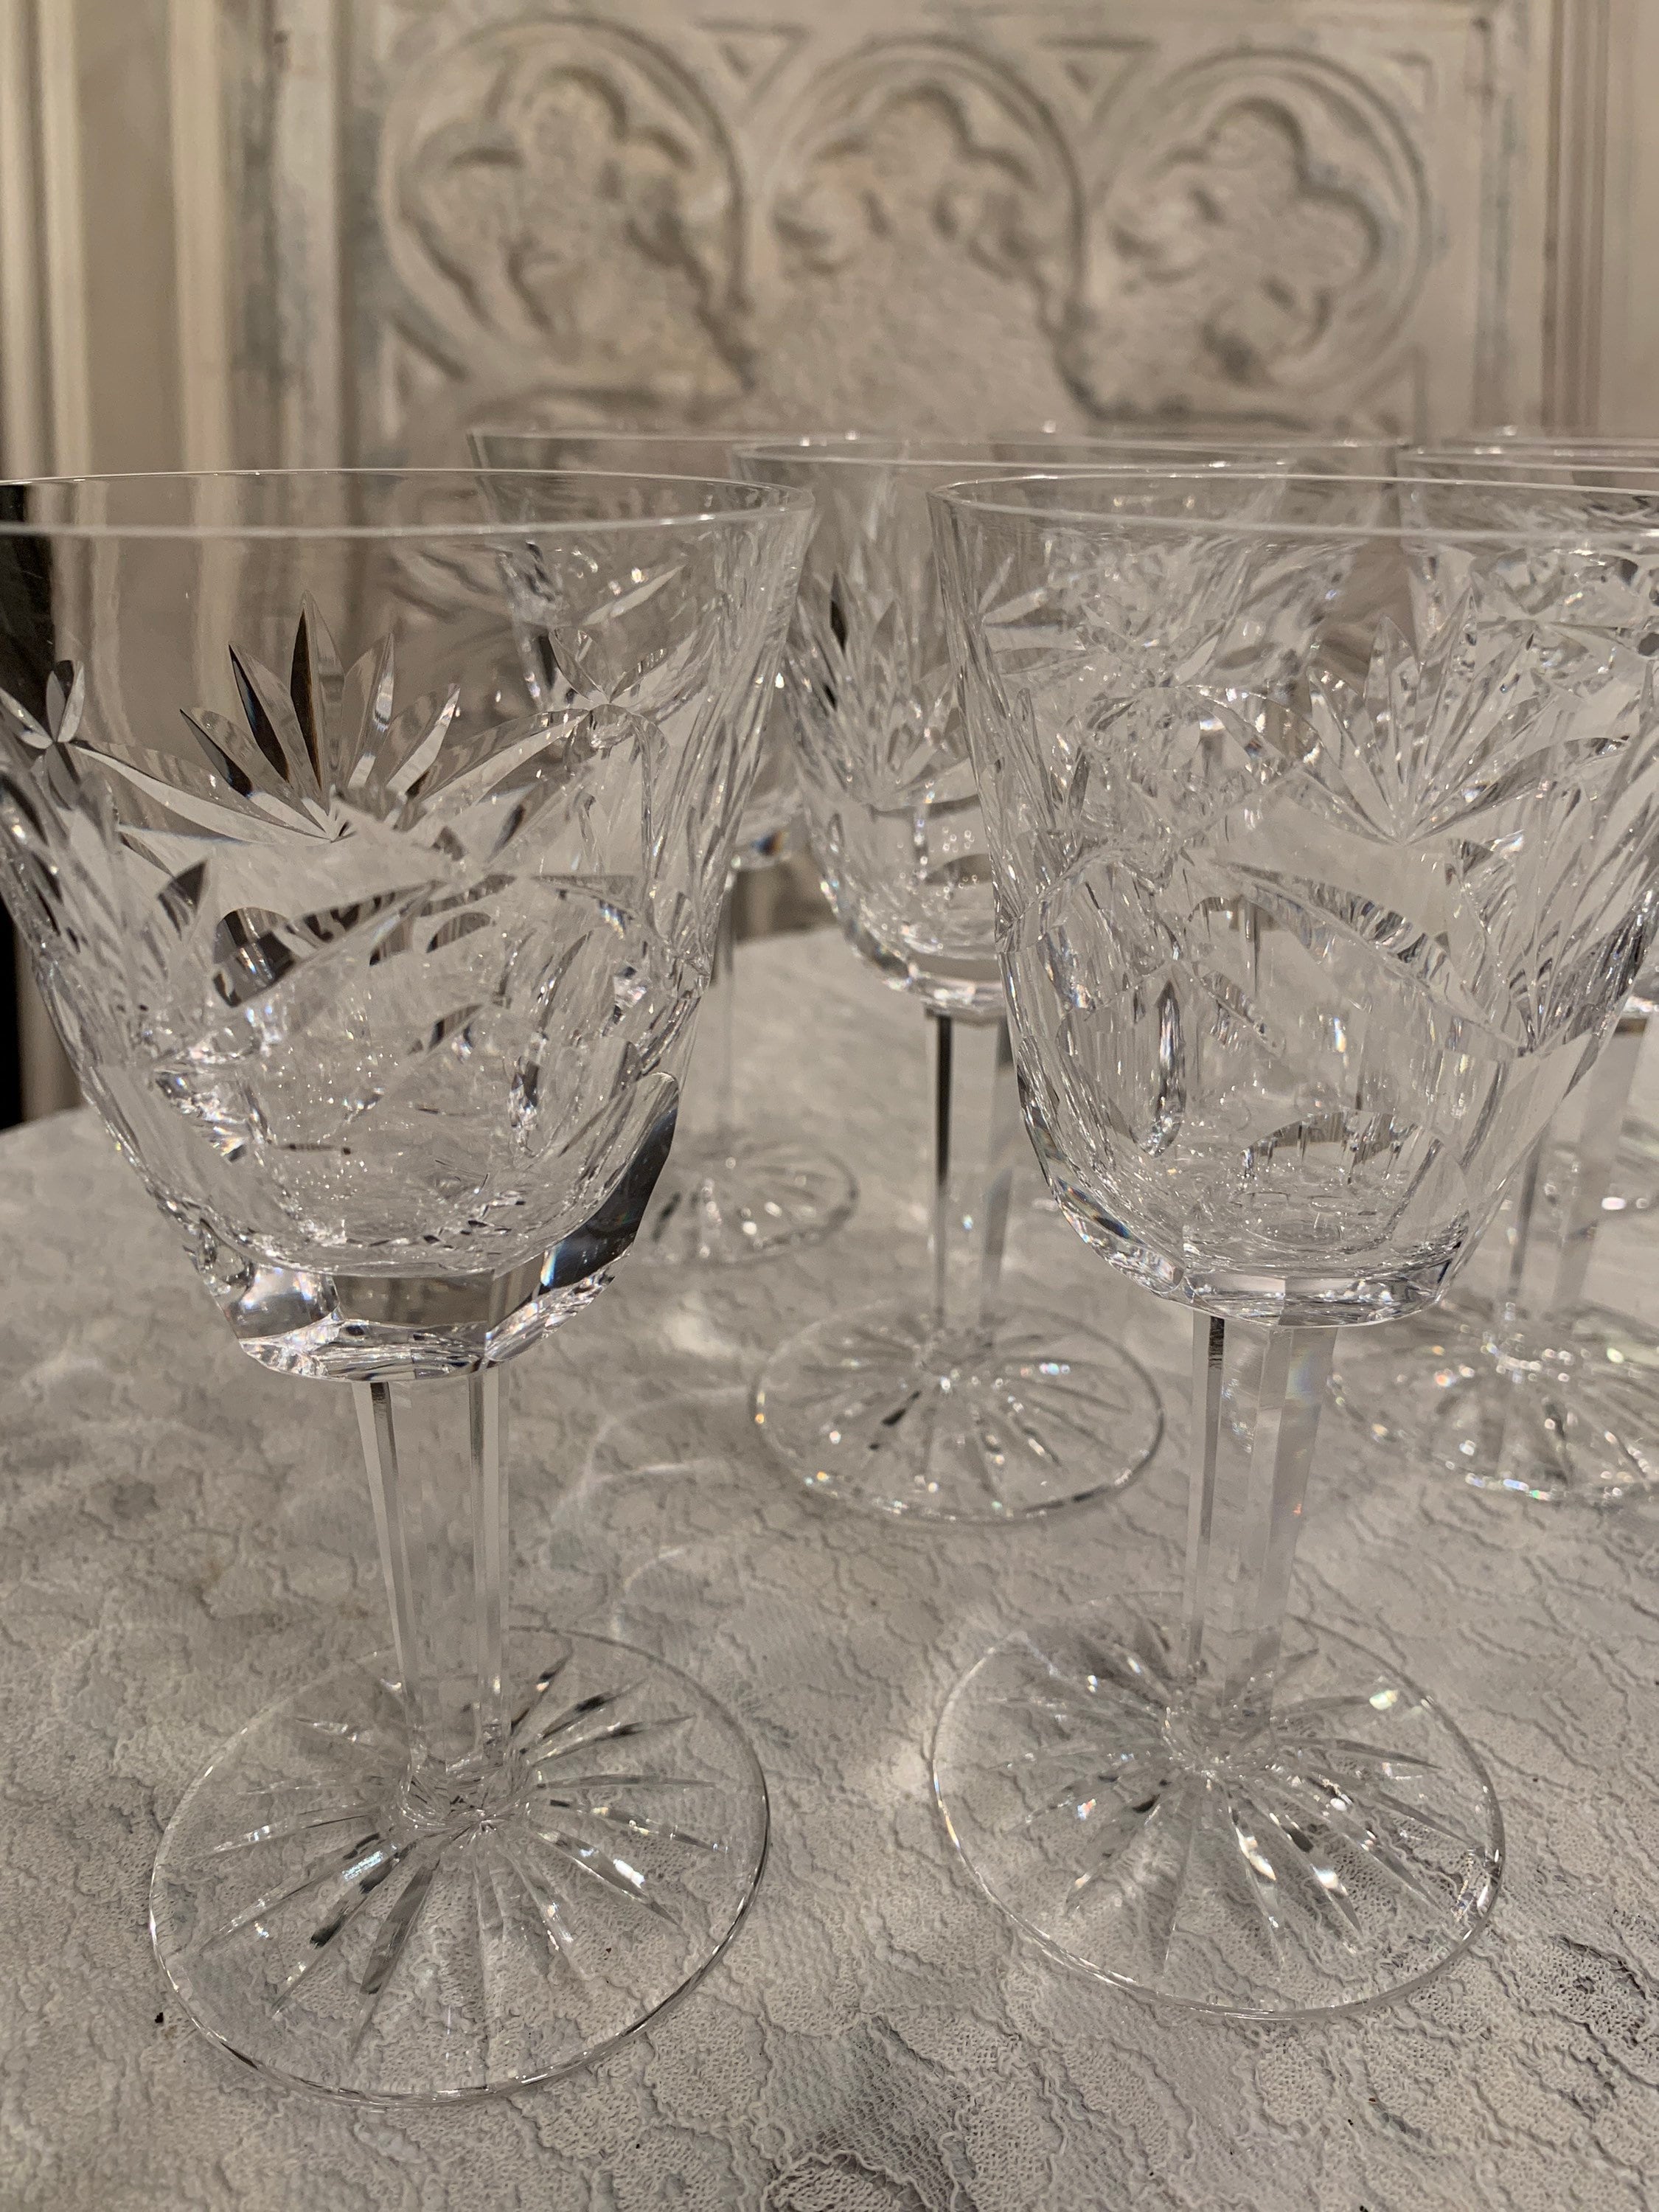 Vintage Wine Glasses, Set of 5, Kosta Boda, Claret 5 oz Glasses, After  Dinner Wine Glasses, Small 5 oz Wine Glasses, Dessert Wine Glasses